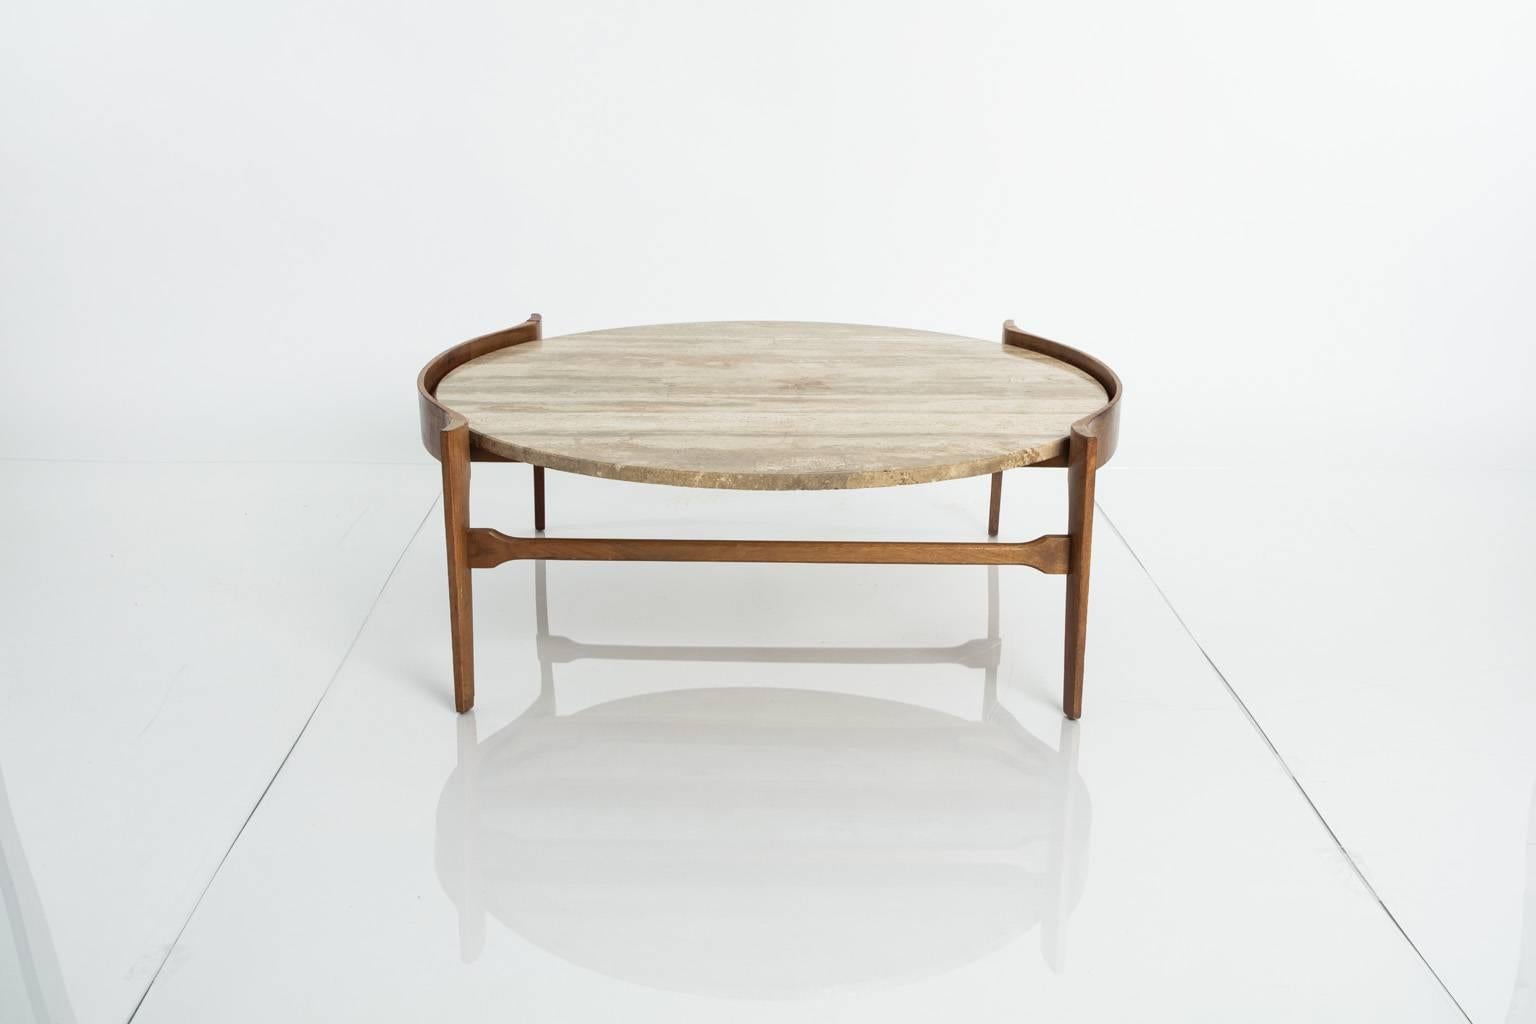 Travertine and walnut coffee table designed for Gordon's Fine Furniture, Johnson City, Tenn.